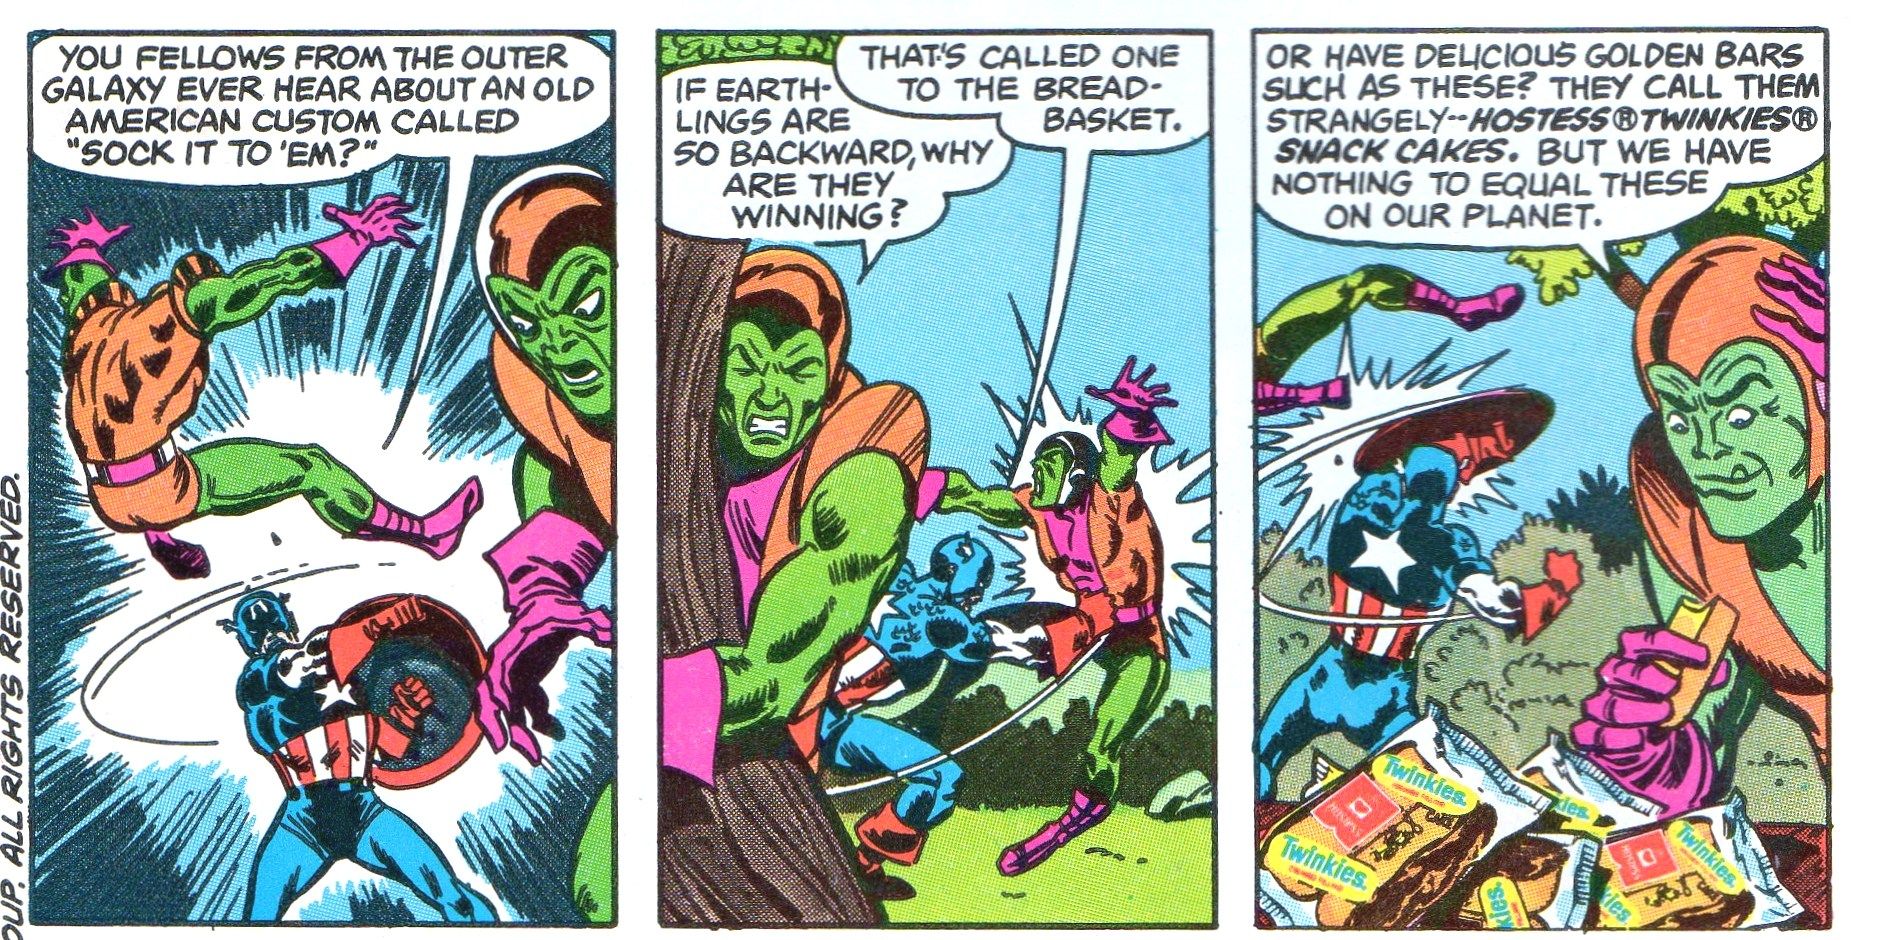 Captain America battles aliens as they feast on Hostess Twinkies. 